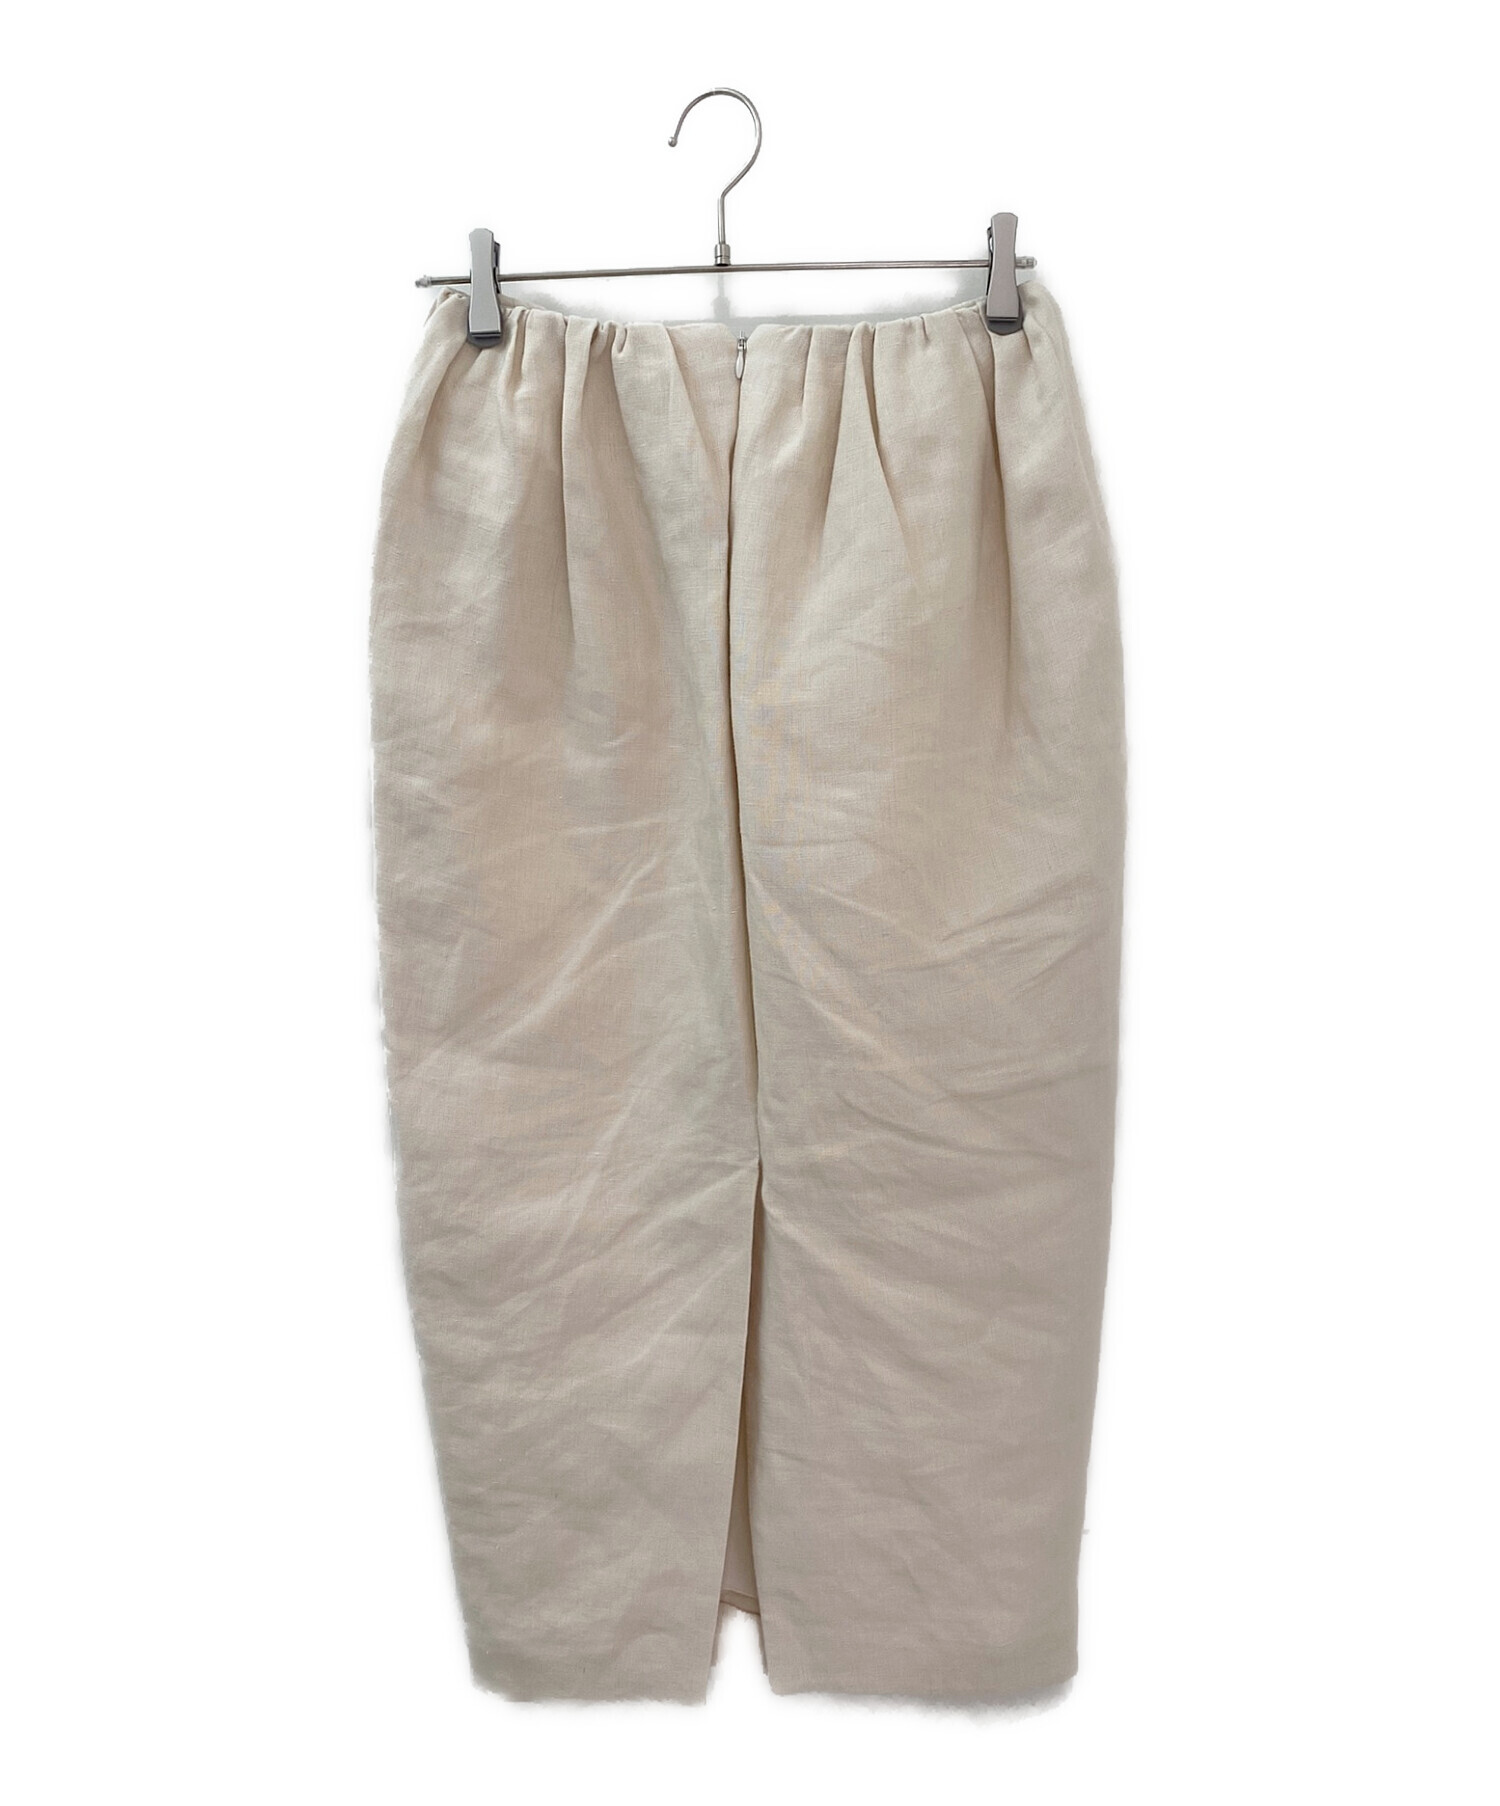 BLAMINK (ブラミンク) リネンタイトスカート オフホワイト サイズ:36